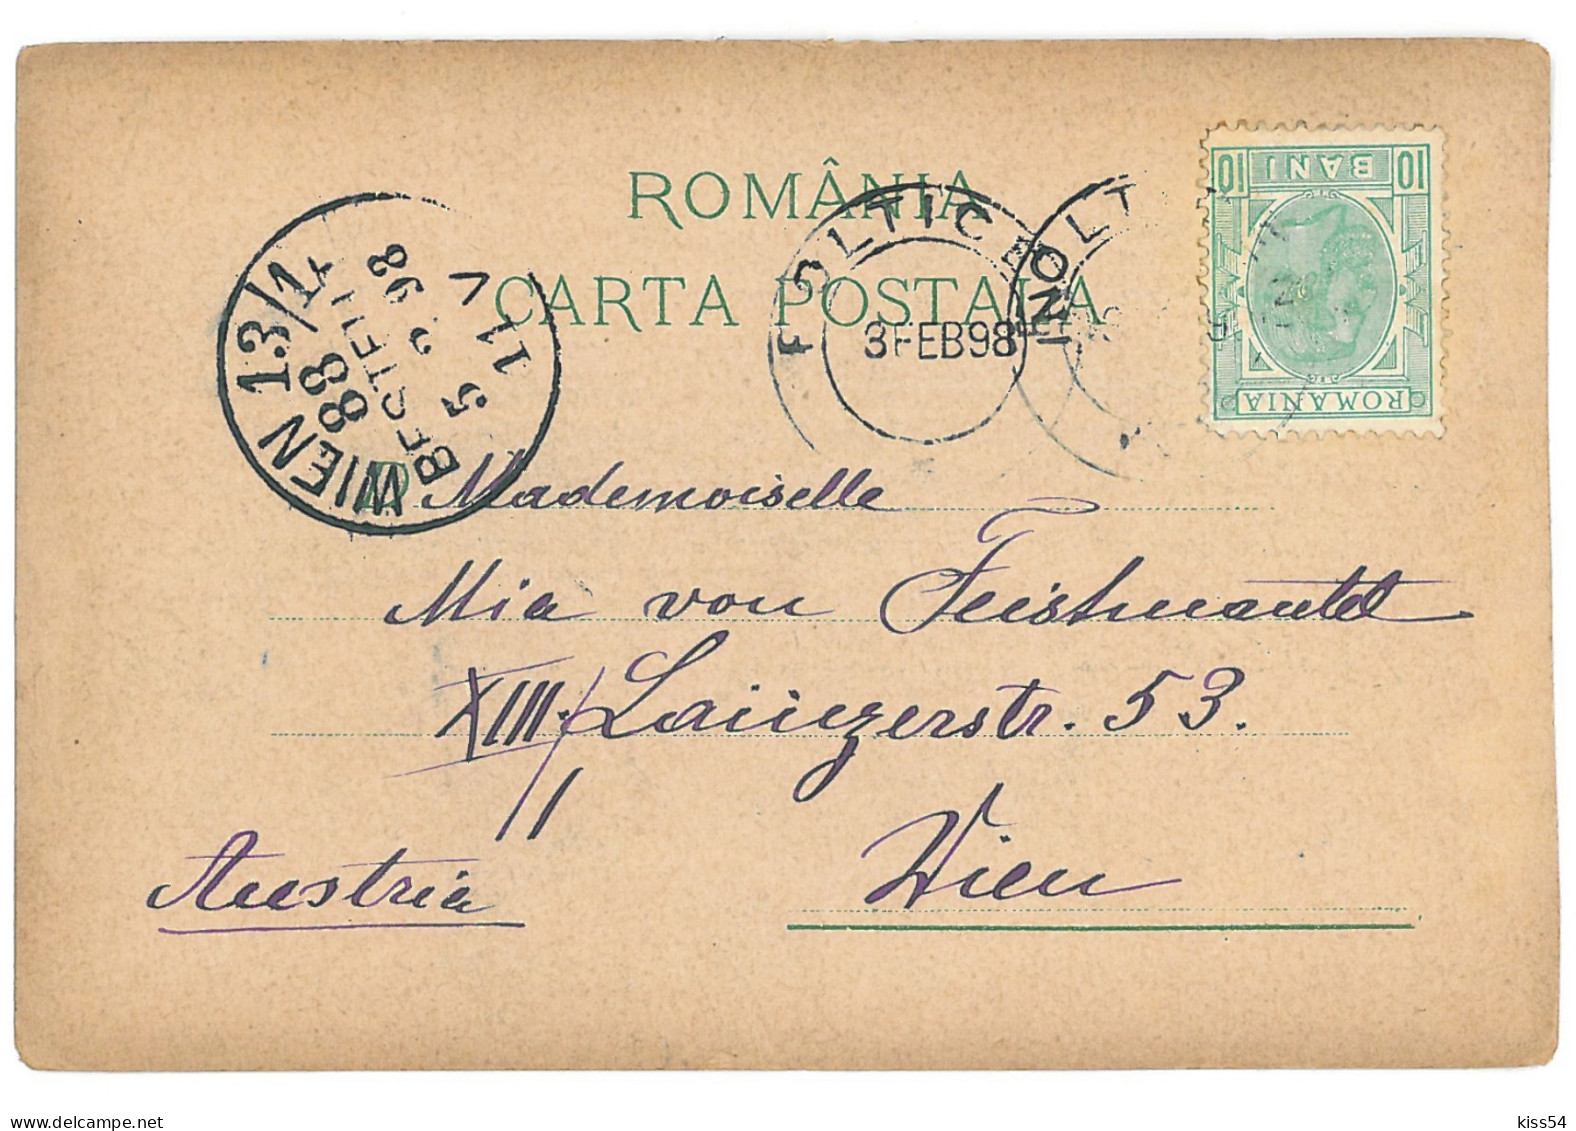 RO 77 - 12099 CONSTANTA, Litho, Romania - Old Postcard - Used - 1899 - Rumänien